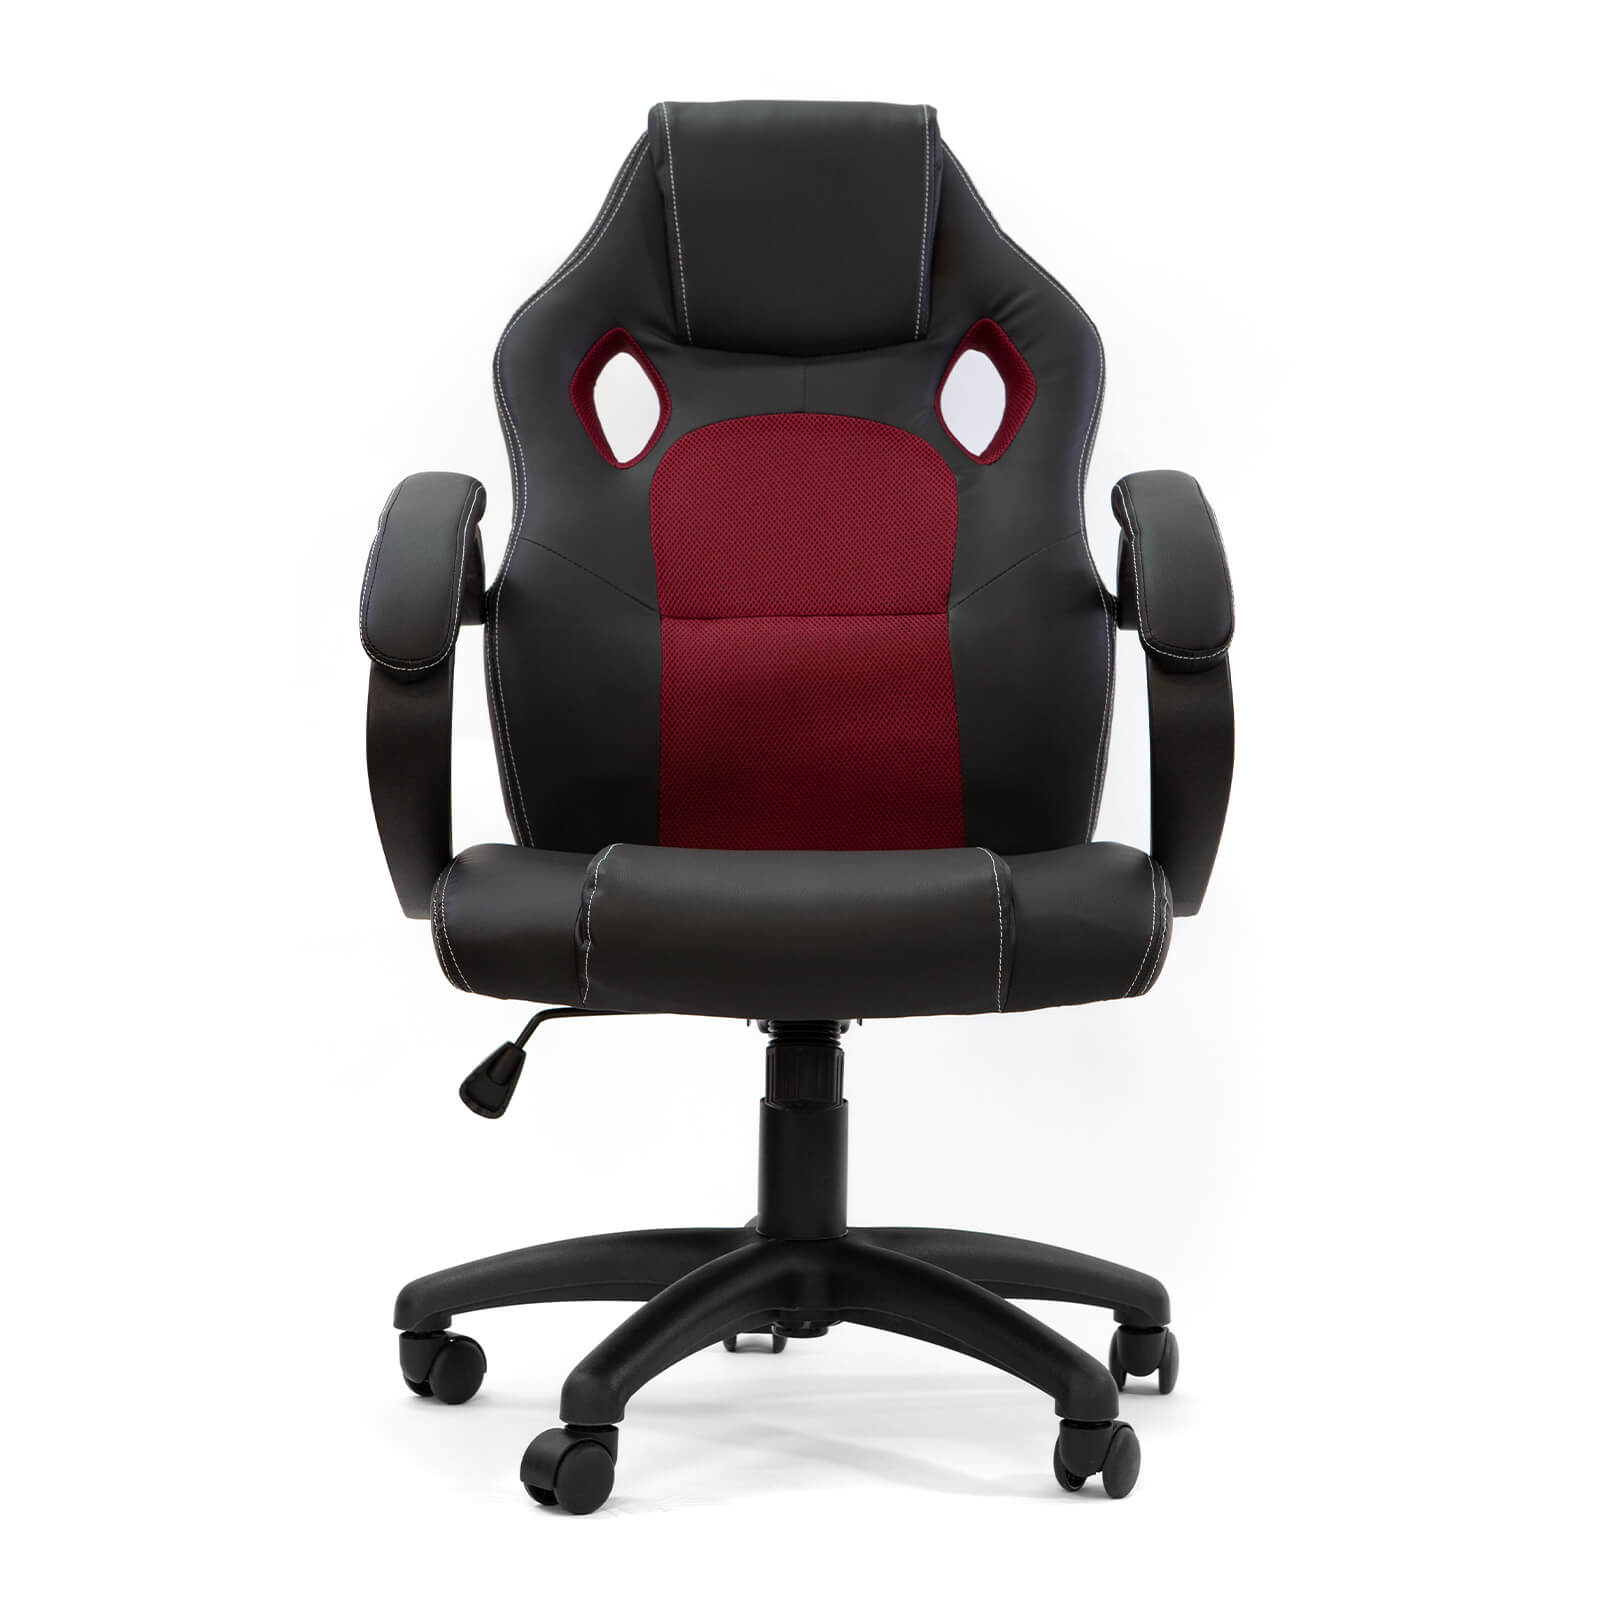 Buy Milano Adjustable Ergonomic Executive Racing Chair Red Black Online Australia at BargainTown